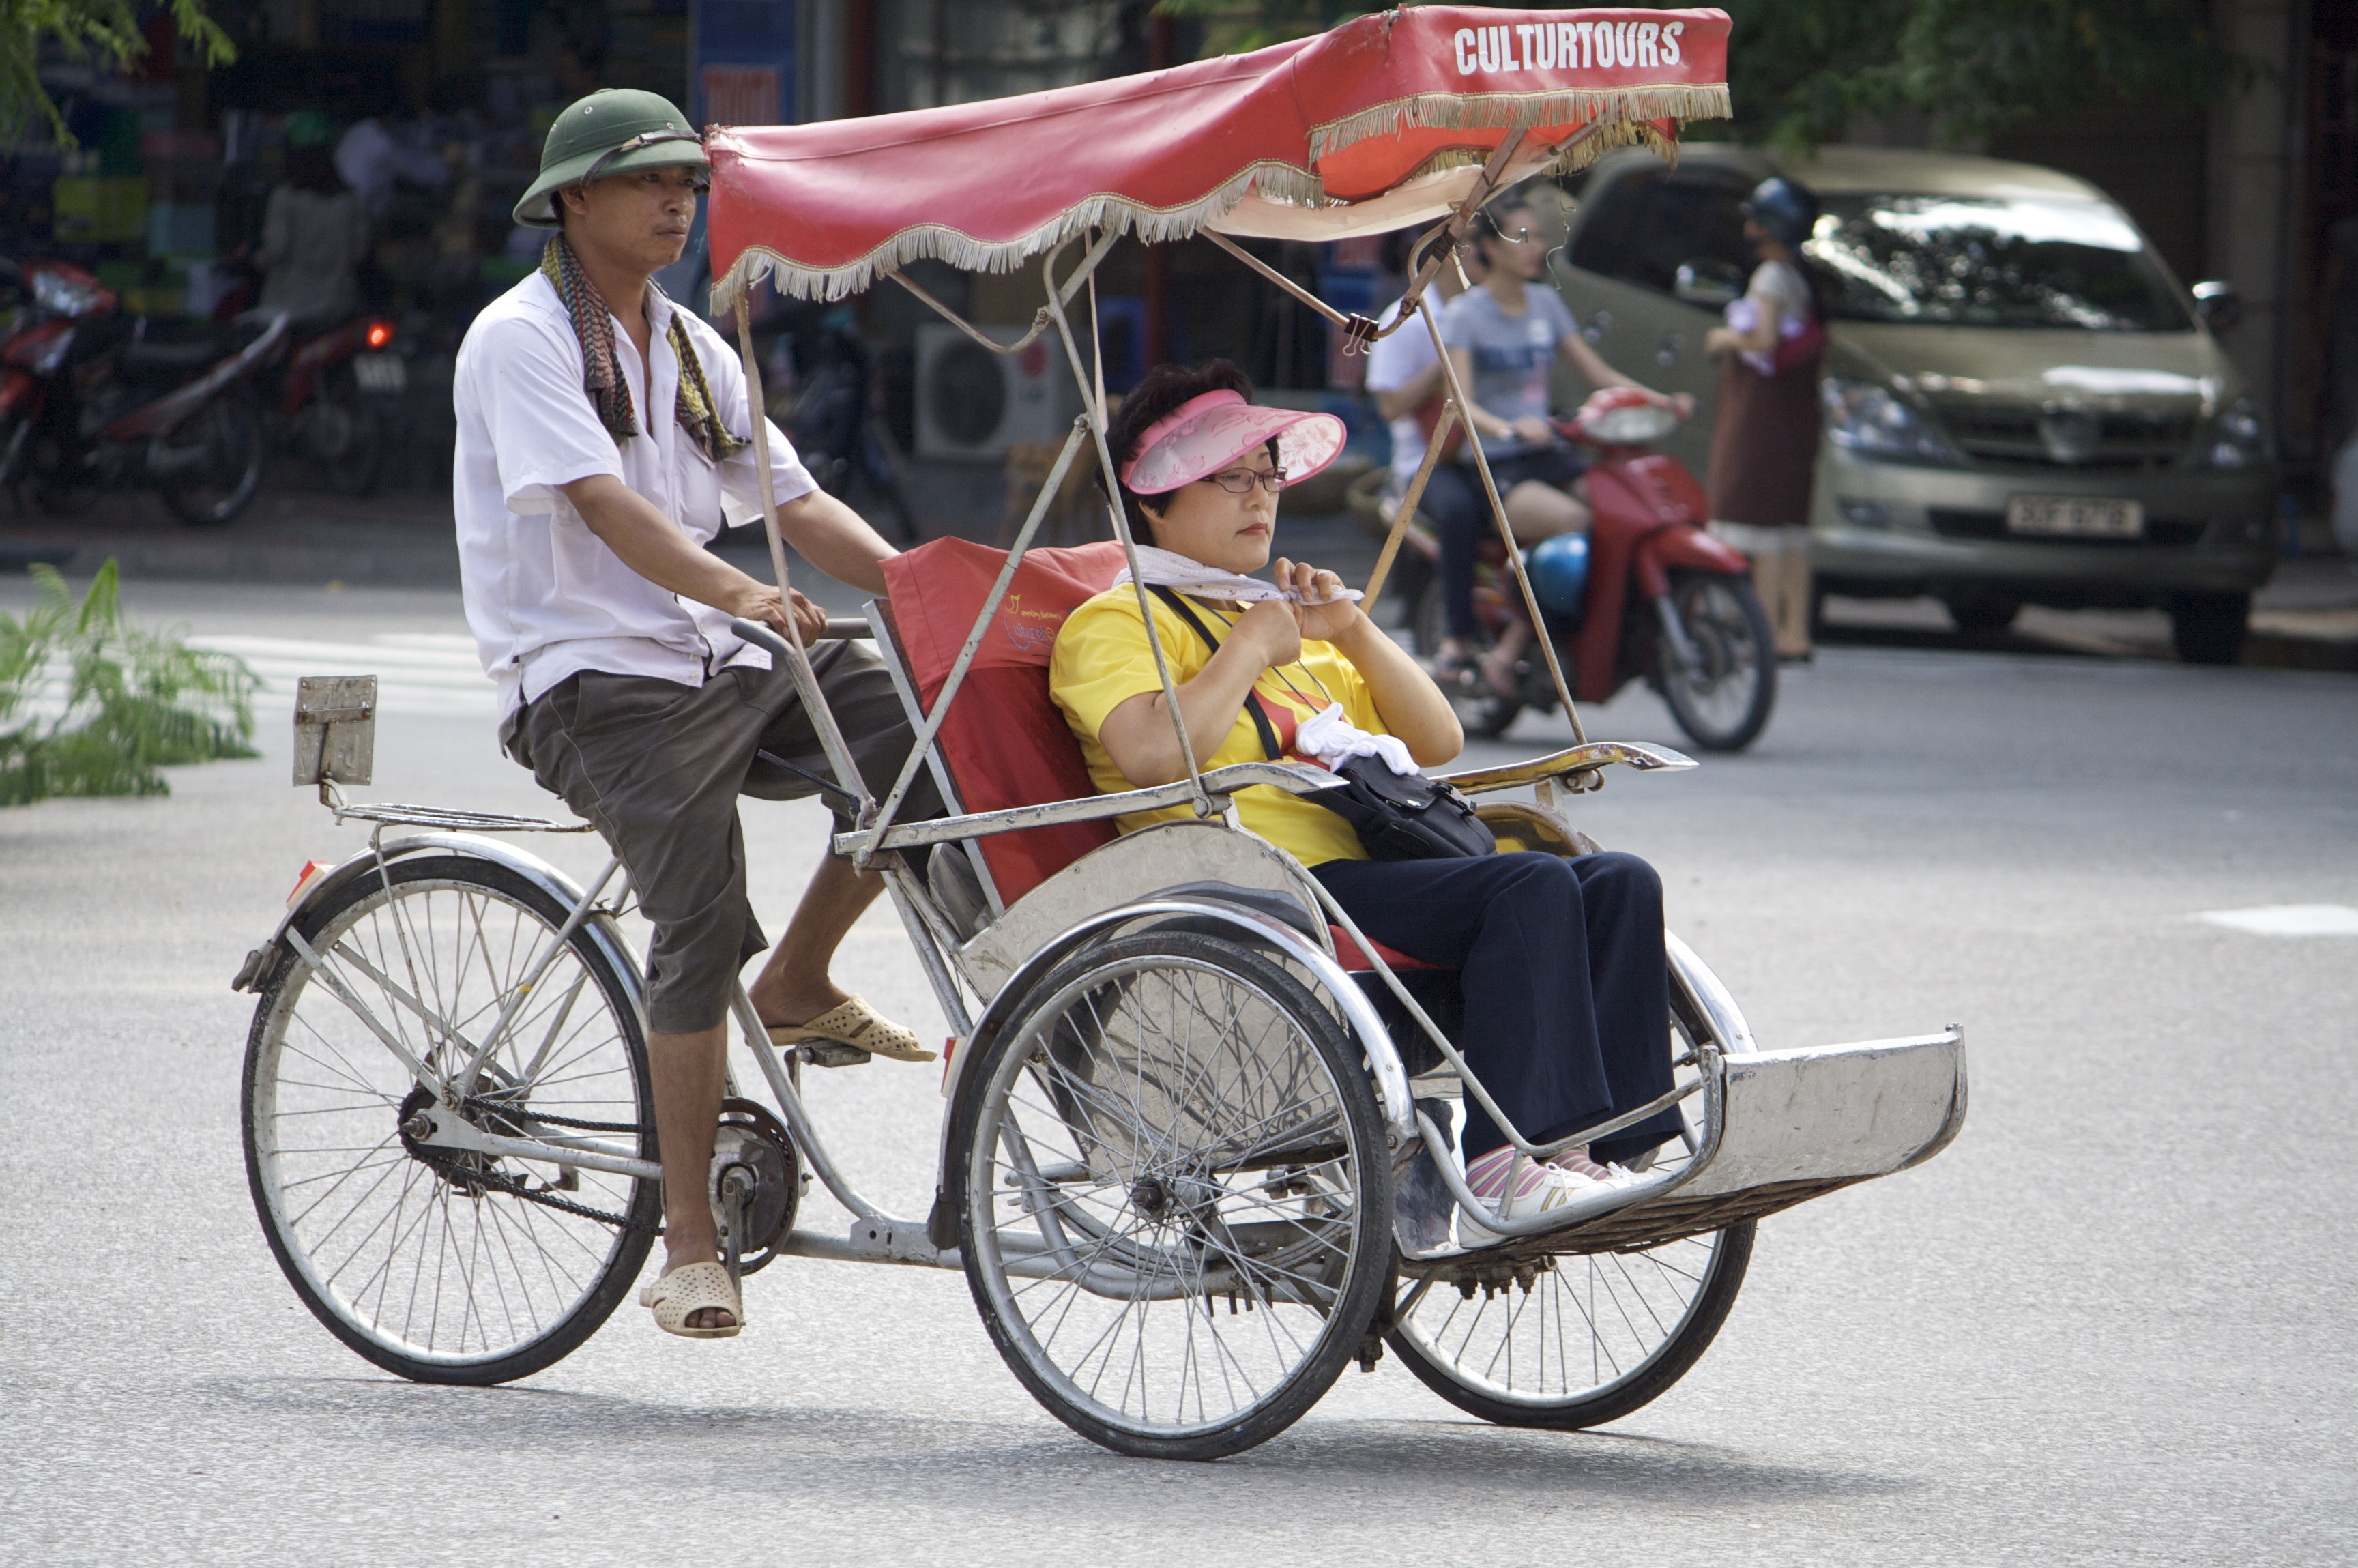 File:Cycle rickshaw in Hanoi.jpg - Wikimedia Commons